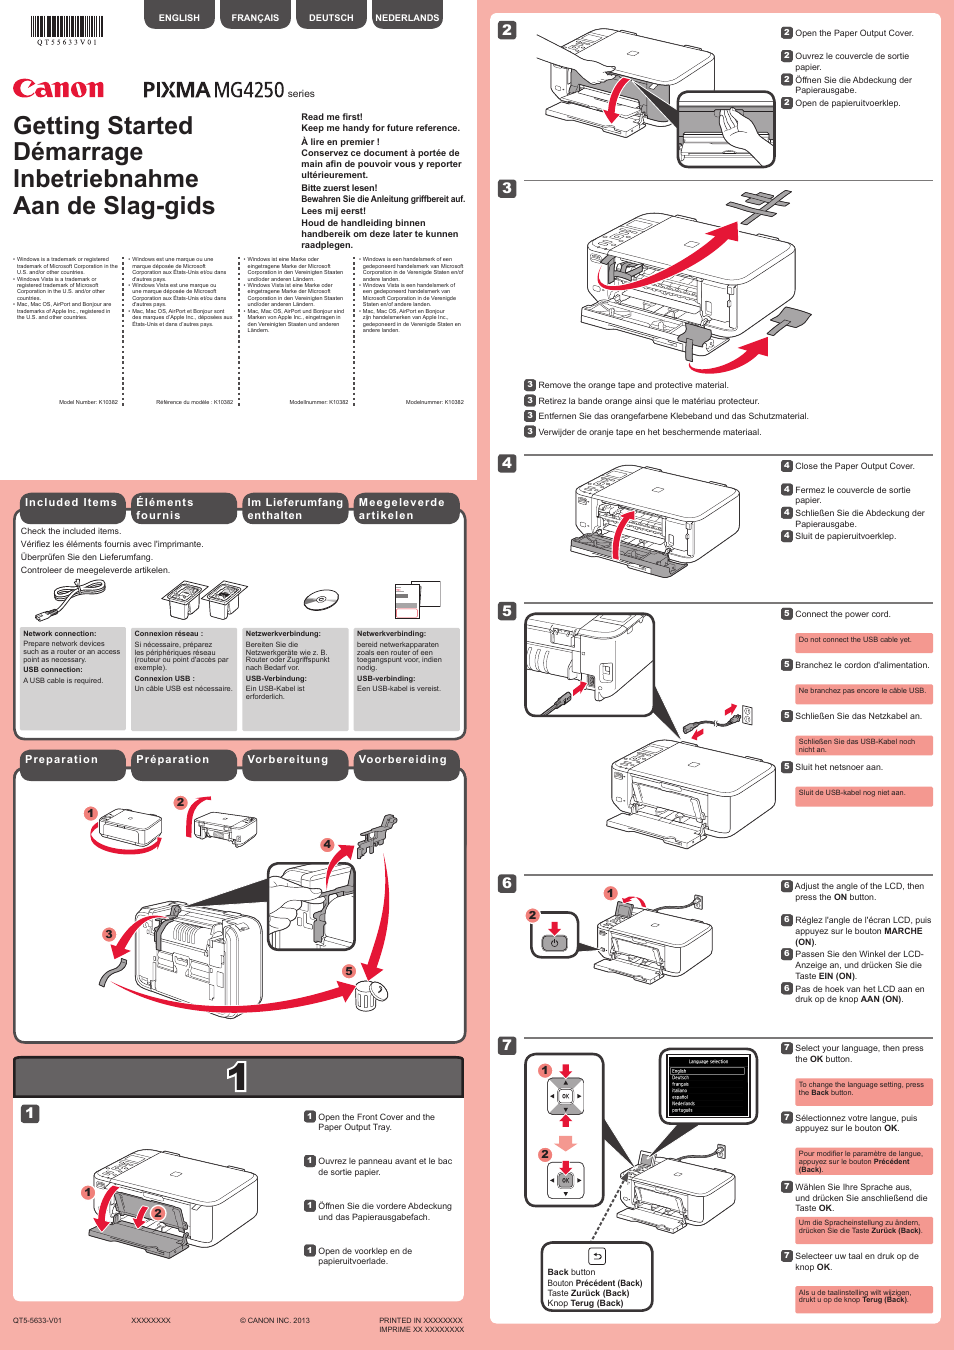 Canon PIXMA MG4250 User Manual | 4 pages | Original mode